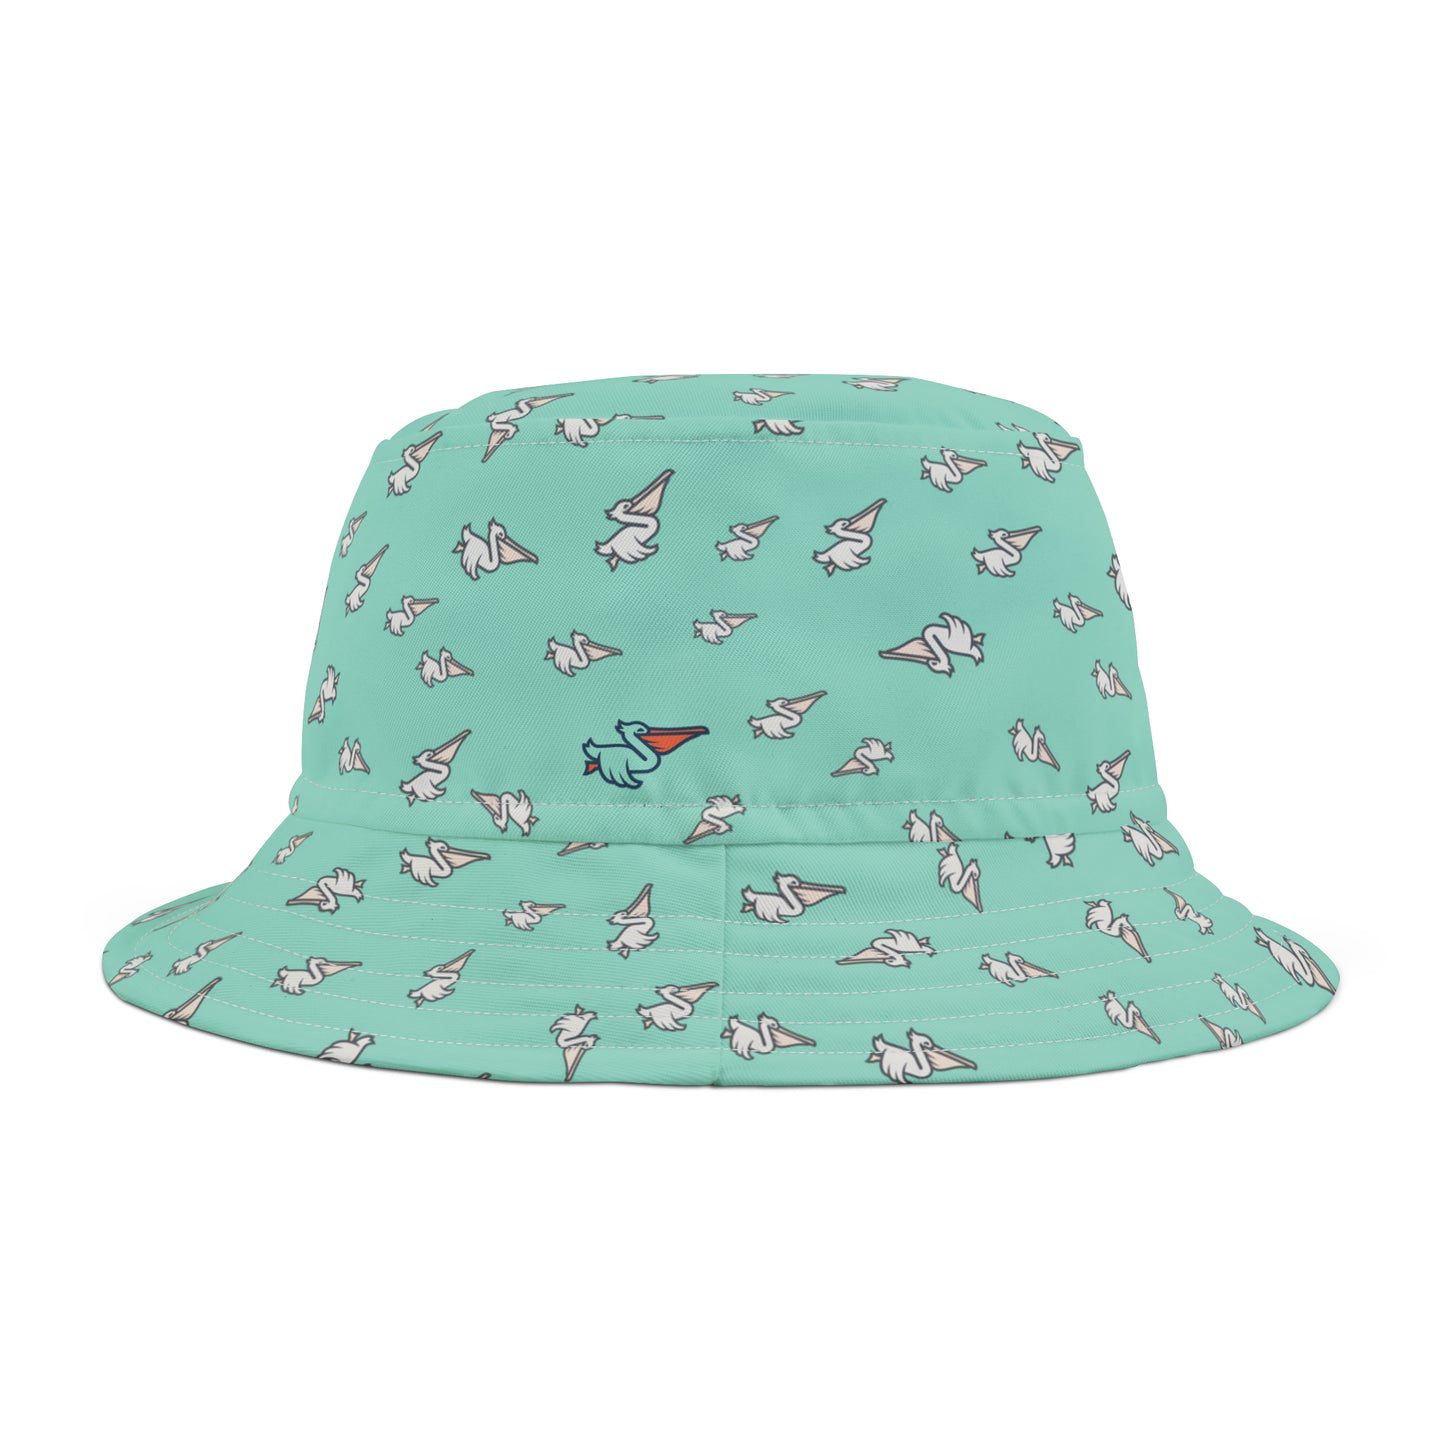 "Virgin Vibes - Swirly Birds" Bucket Hat